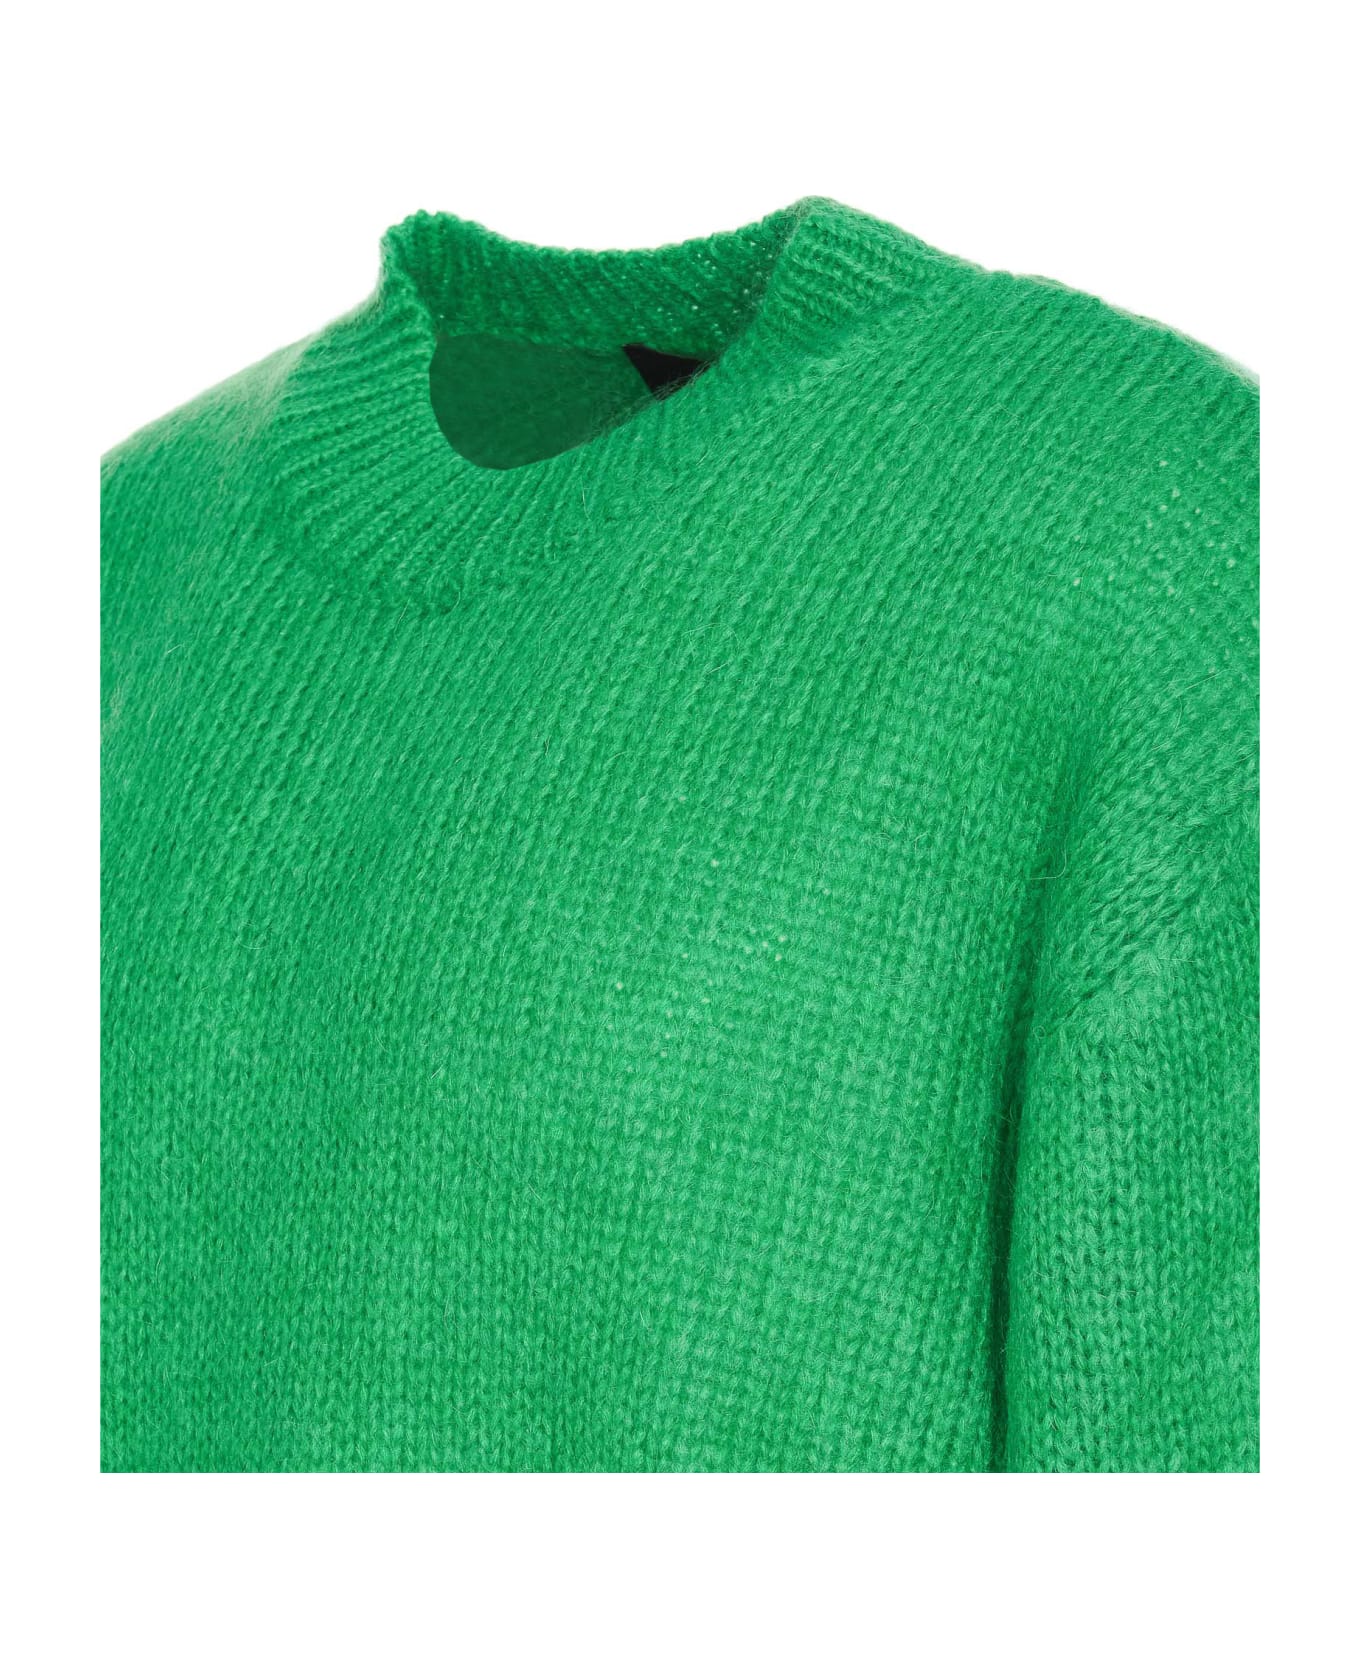 REPRESENT Mohair Sweater Sweater - ISLAND GREEN